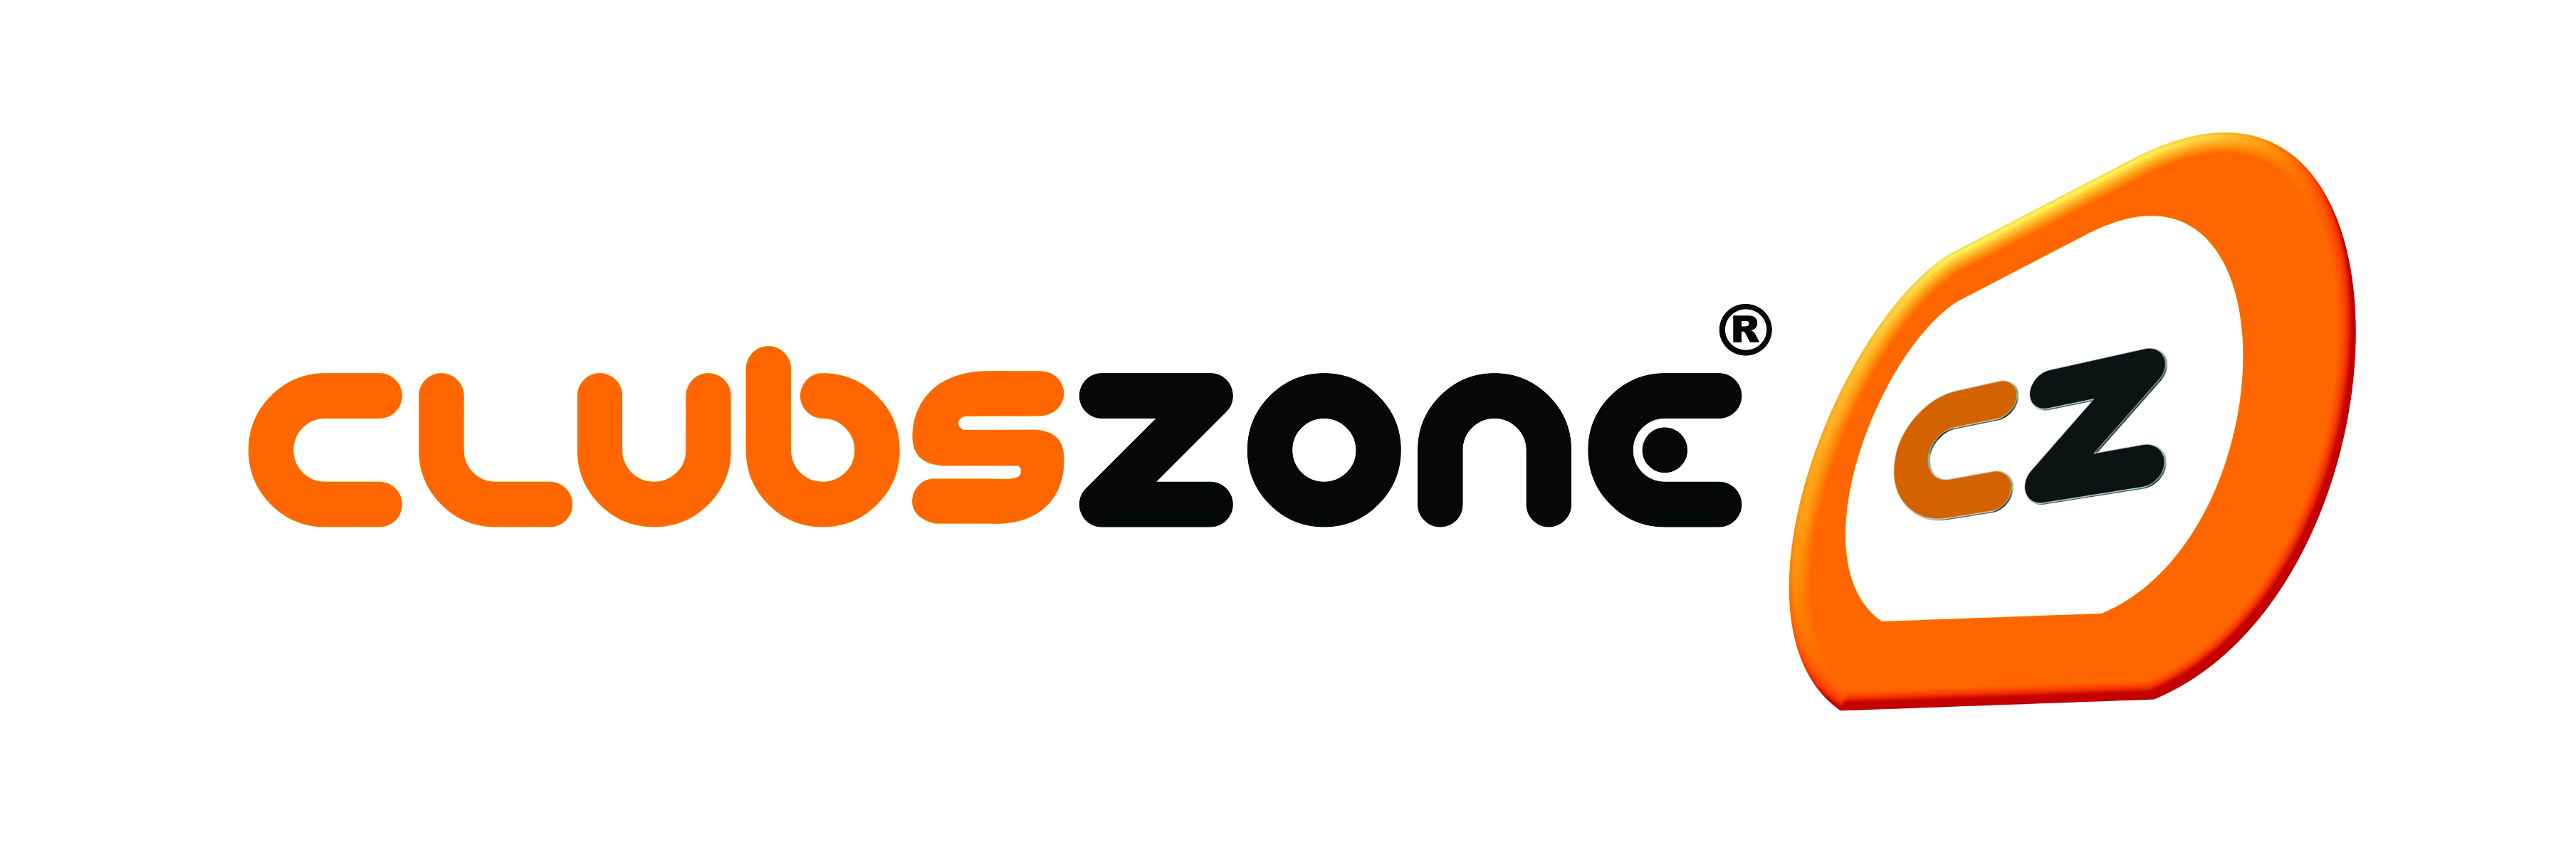 clubszone logo